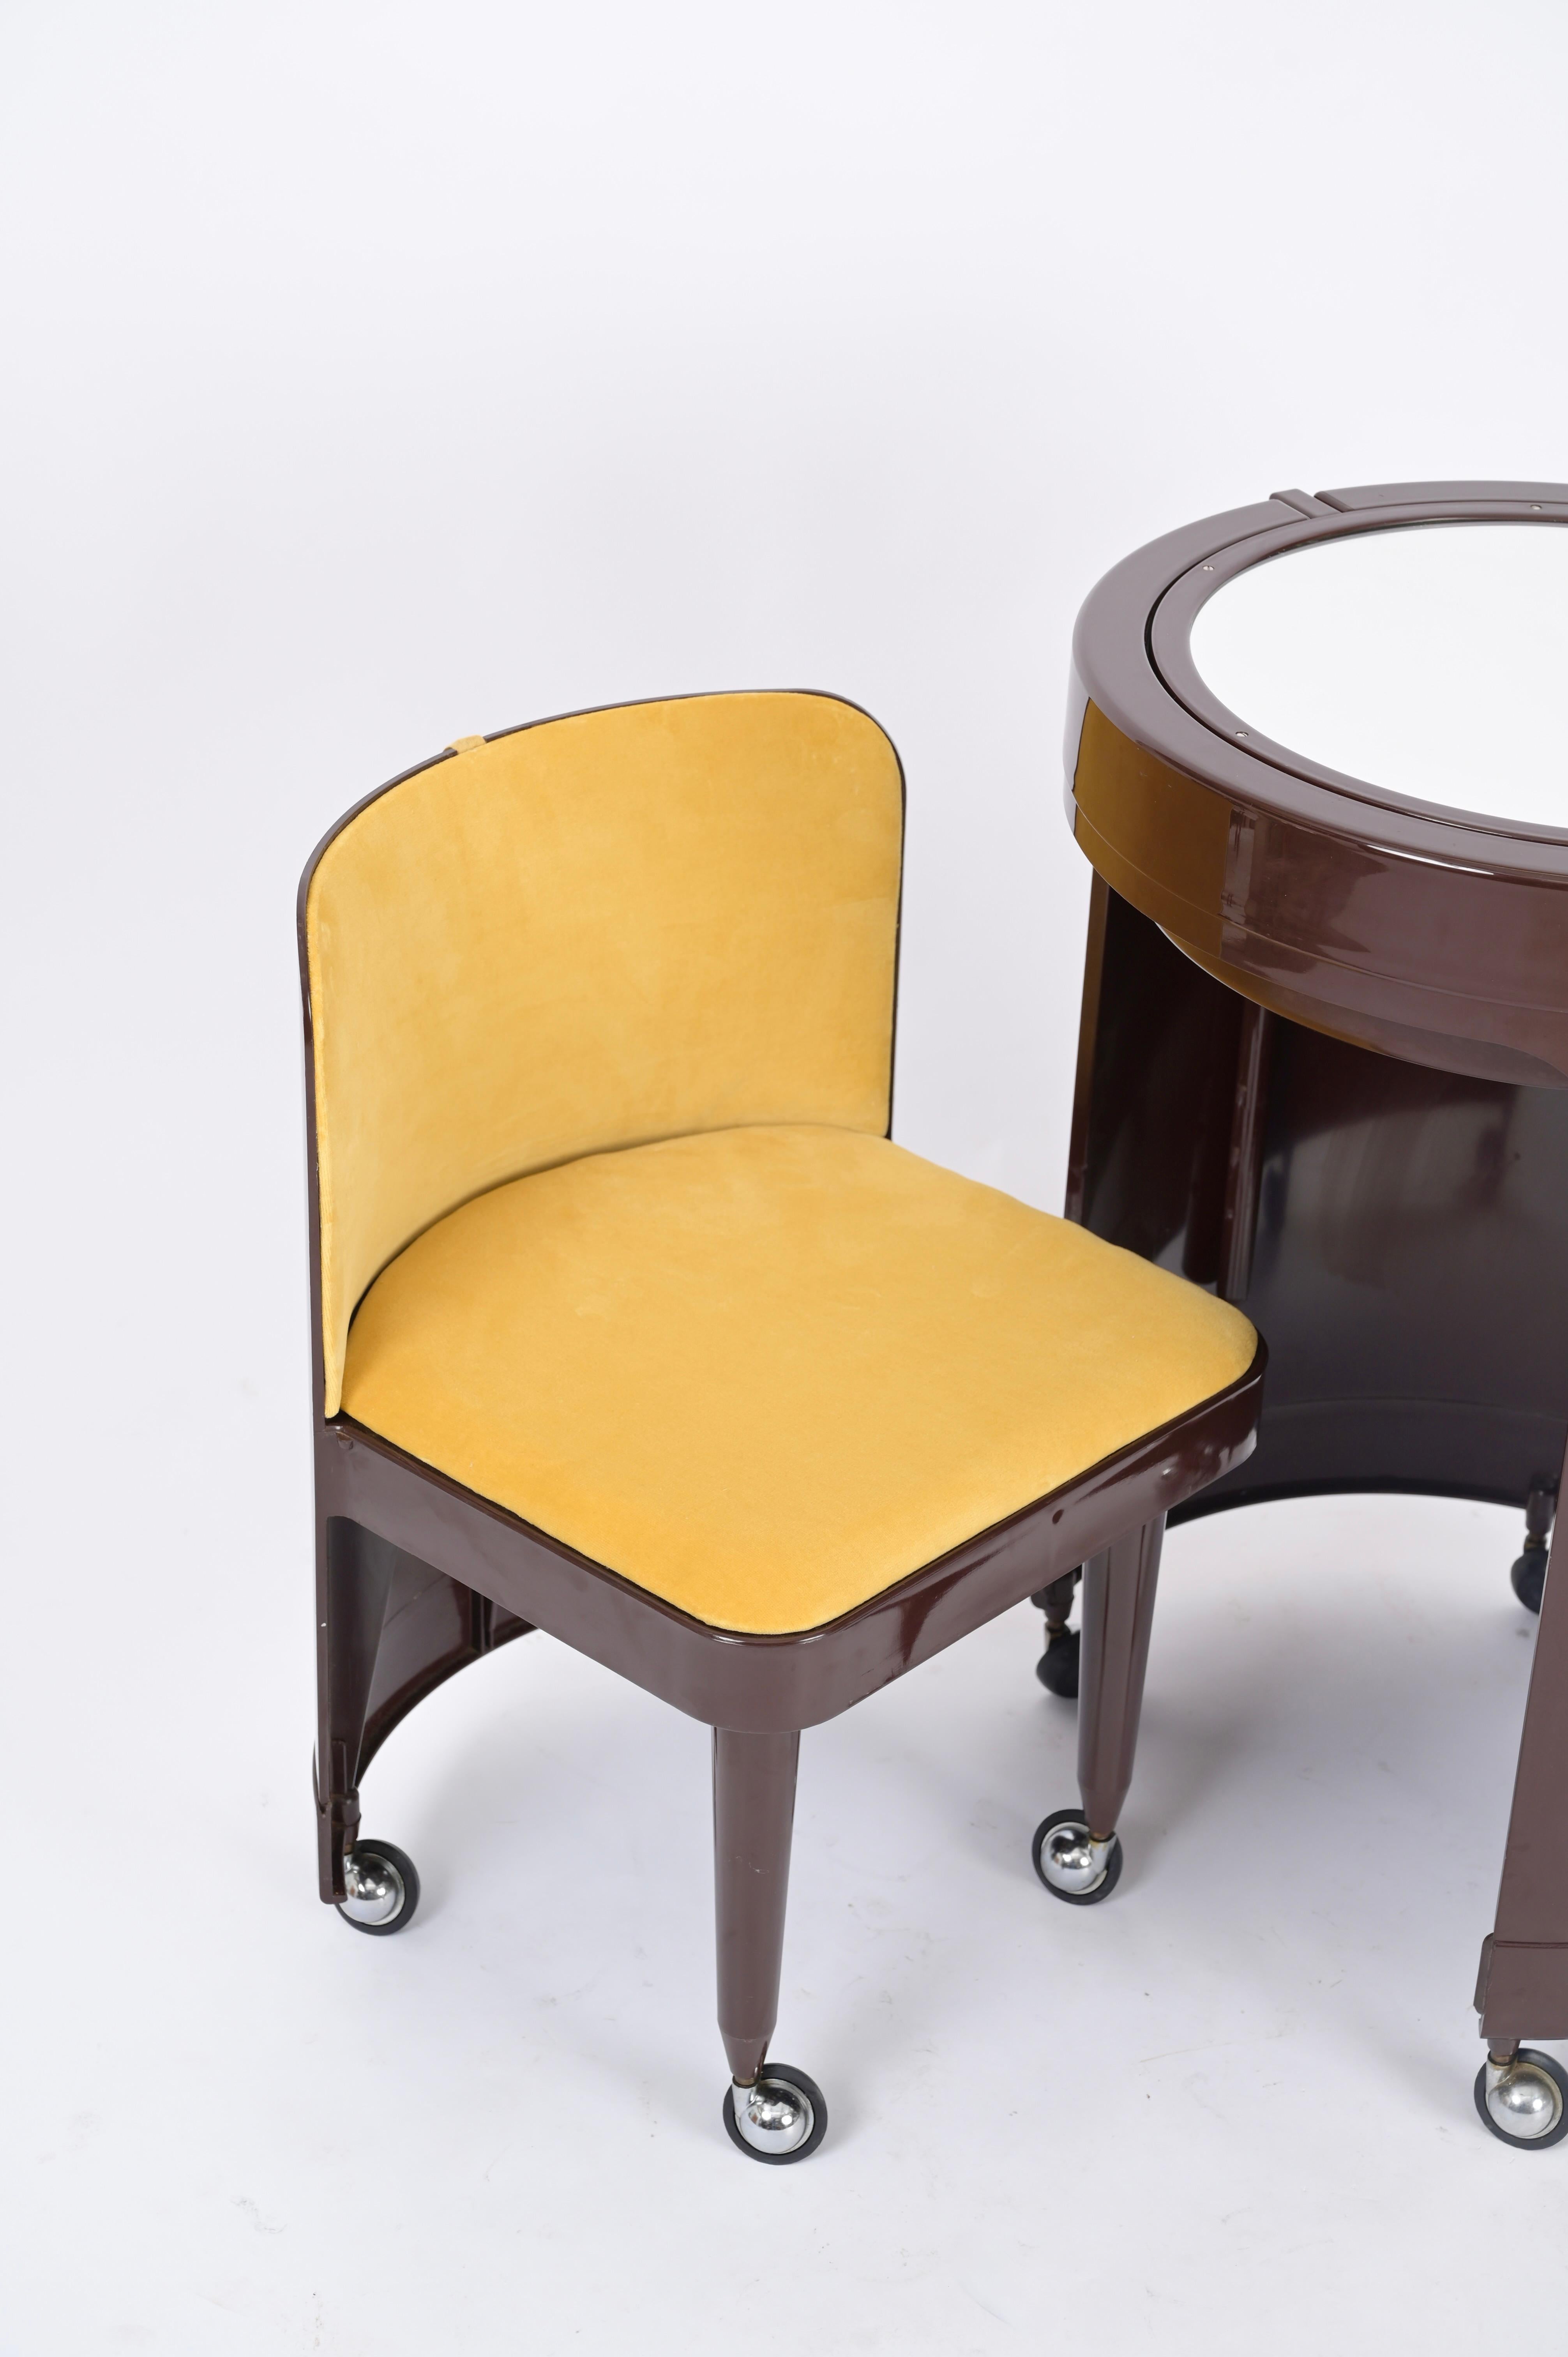 Studio Kastilia Silvi, Italian Brown Vanity Table with Yellow Seat, 1970s For Sale 7